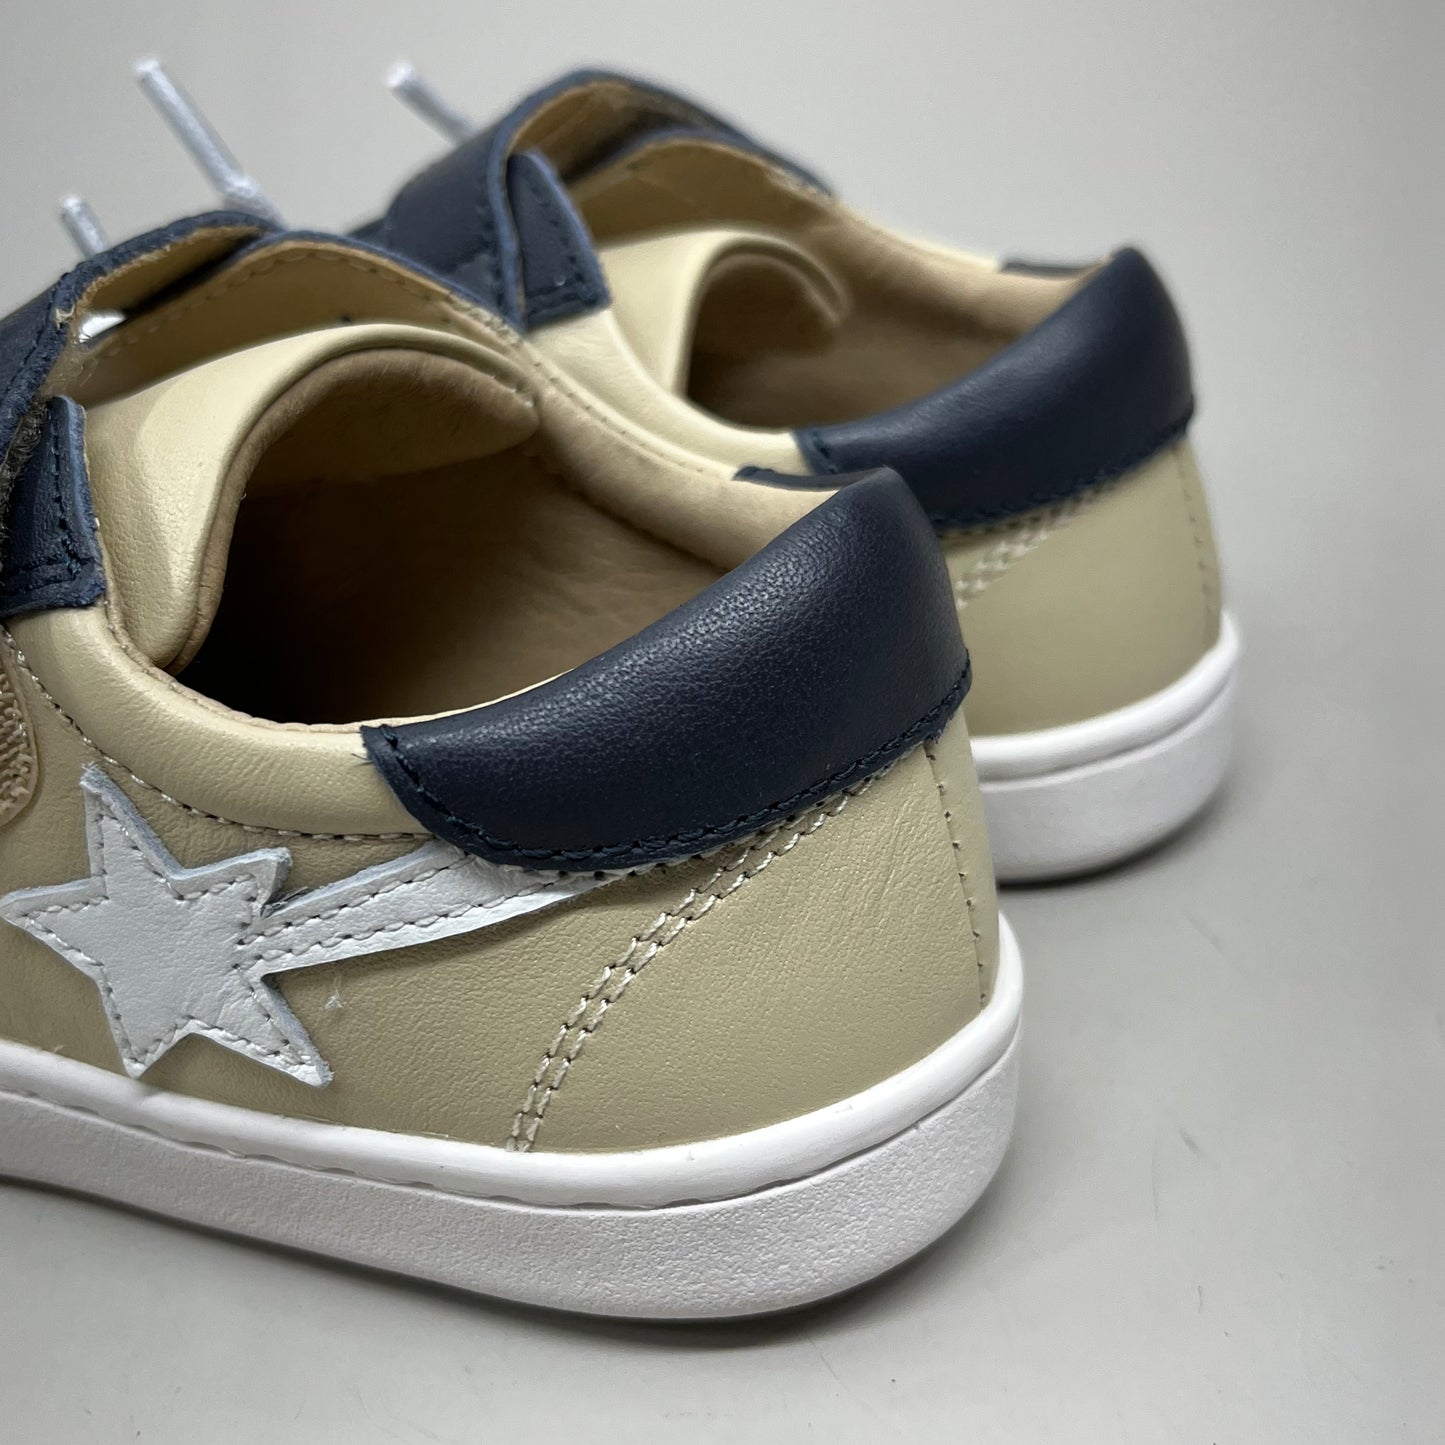 OLD SOLES Runsky Sneakers Leather Shoe Kid’s Sz 24 US 8 Cream/Navy/Snow #6135